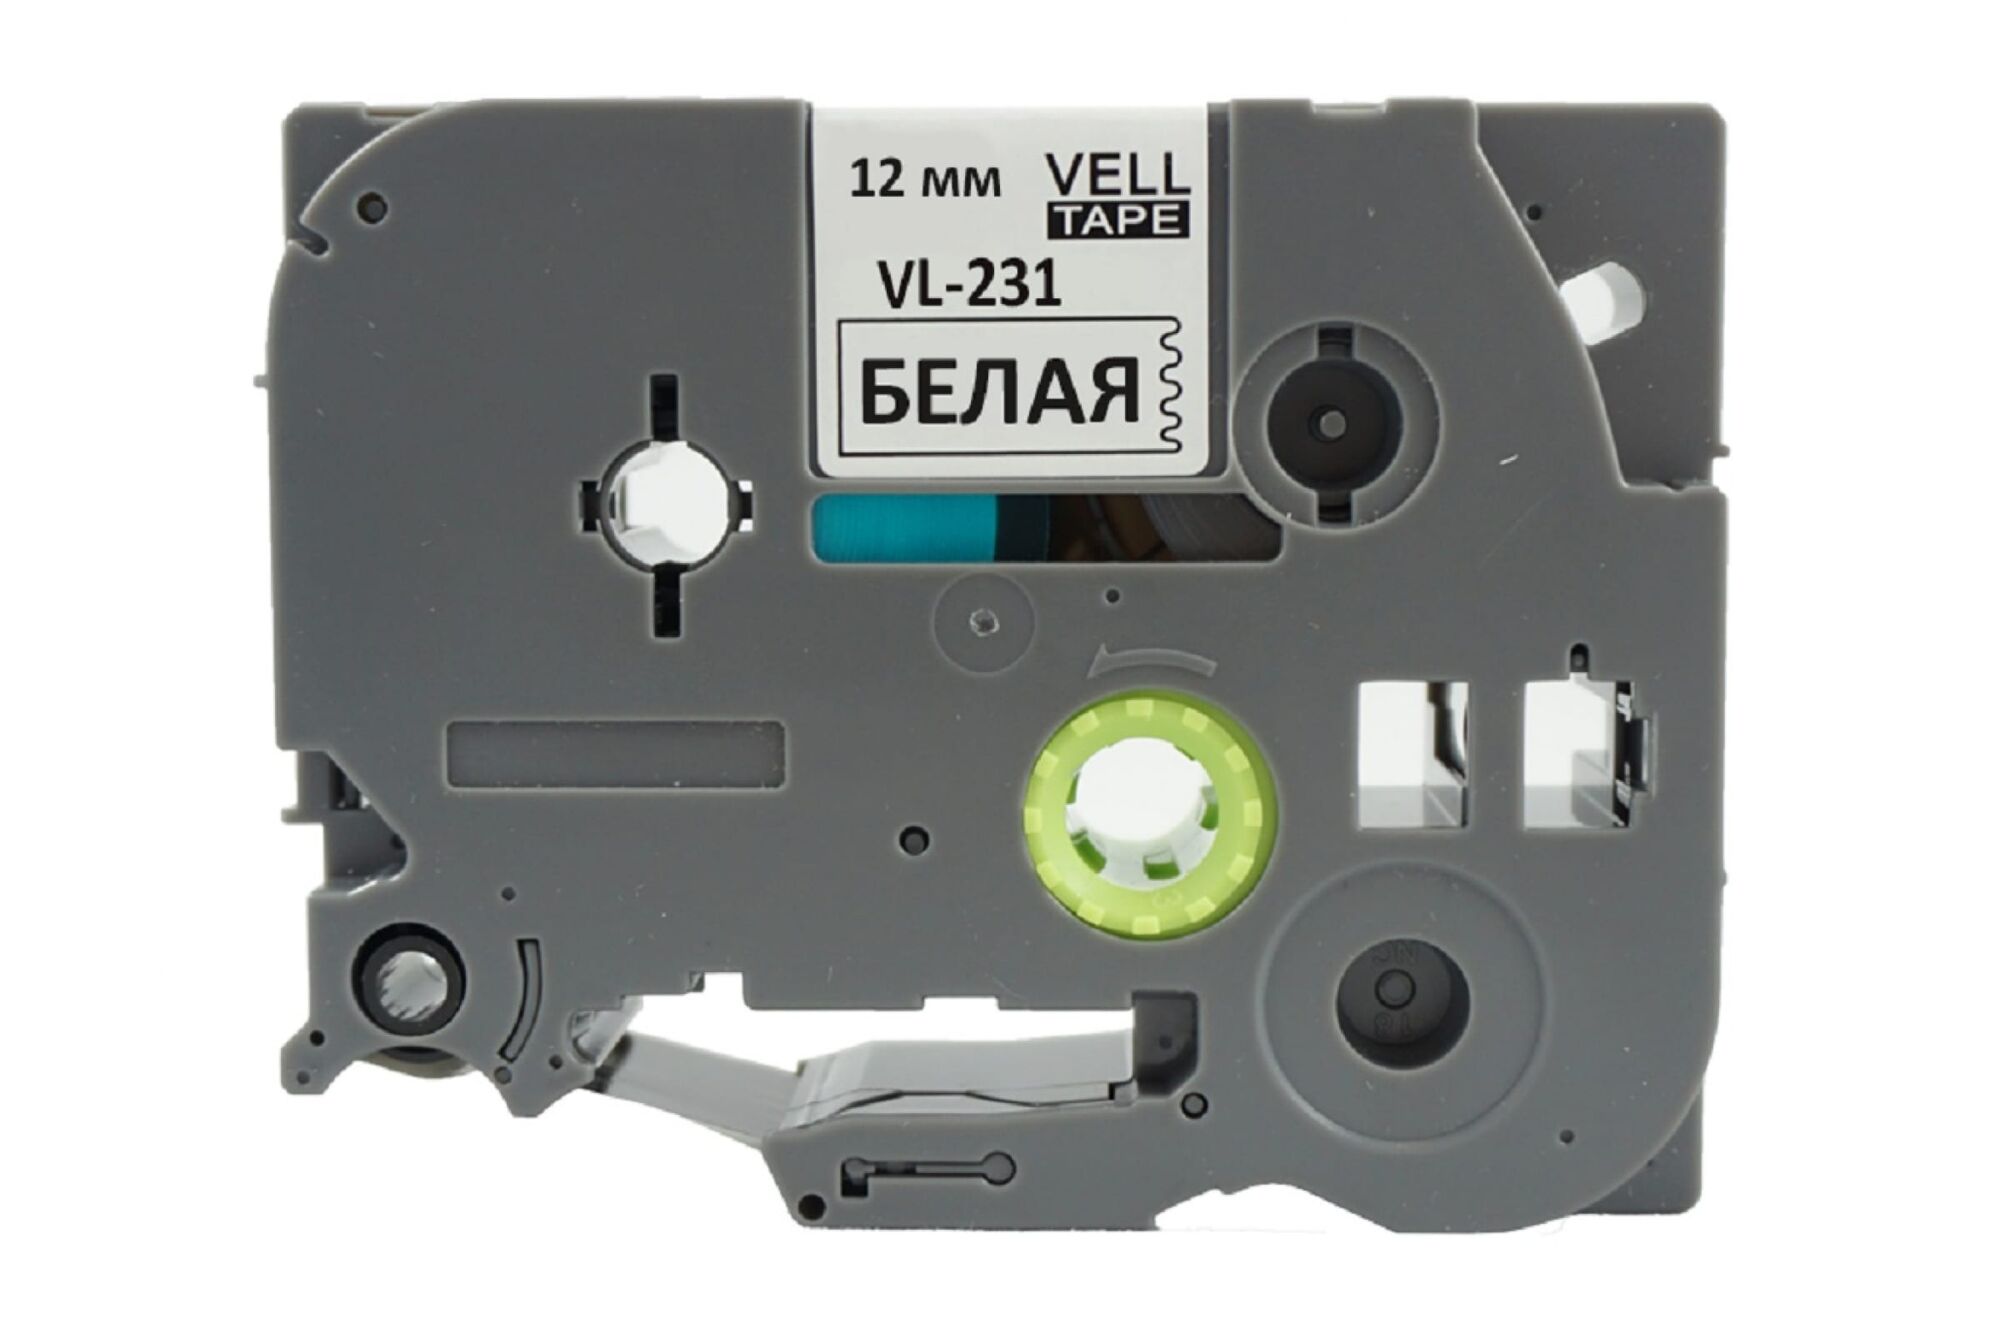 Лента Vell VL-231 12 мм, черный на белом для PT 1010/1280/D200/H105/E100/ D600/E300/2700/ P700/E550/9700, 231